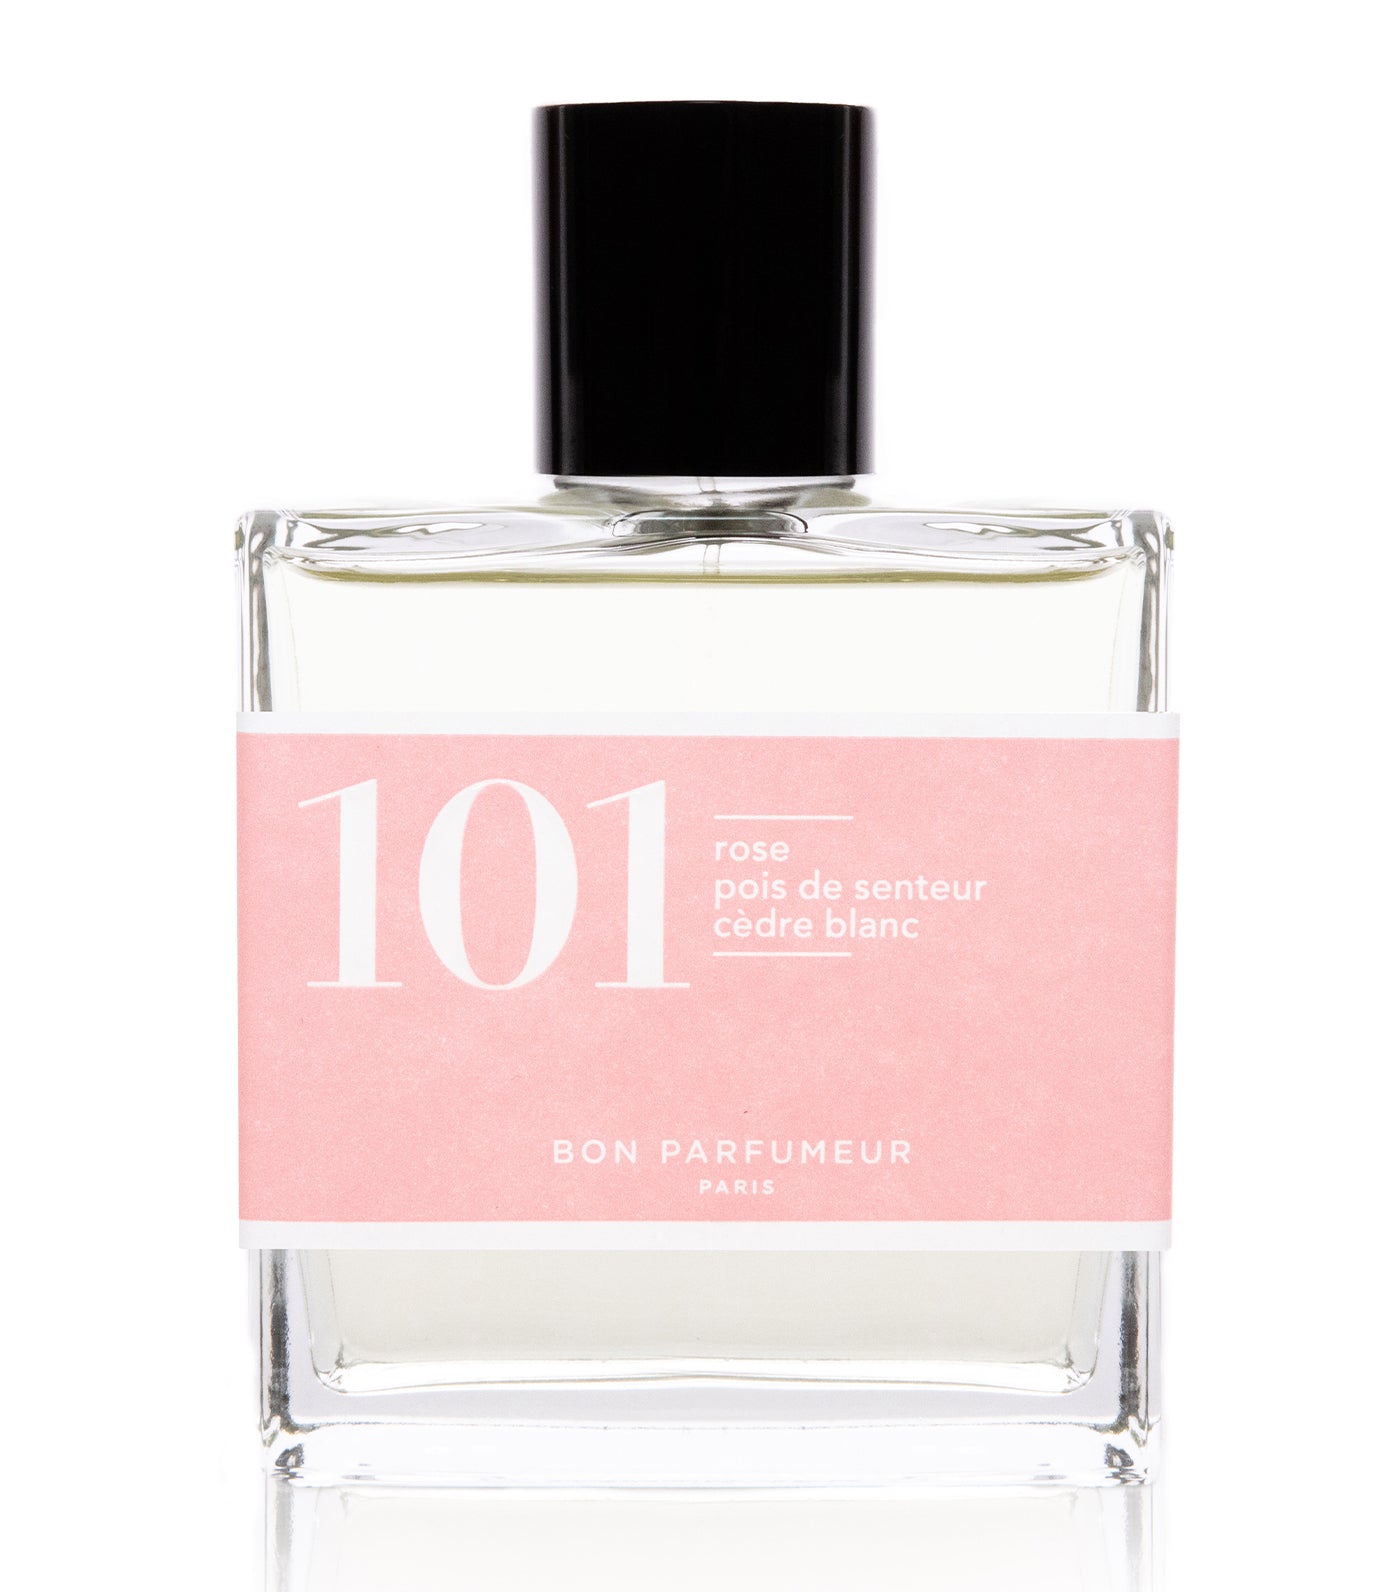 Eau de parfum 101 : rose, sweet pea and white cedar